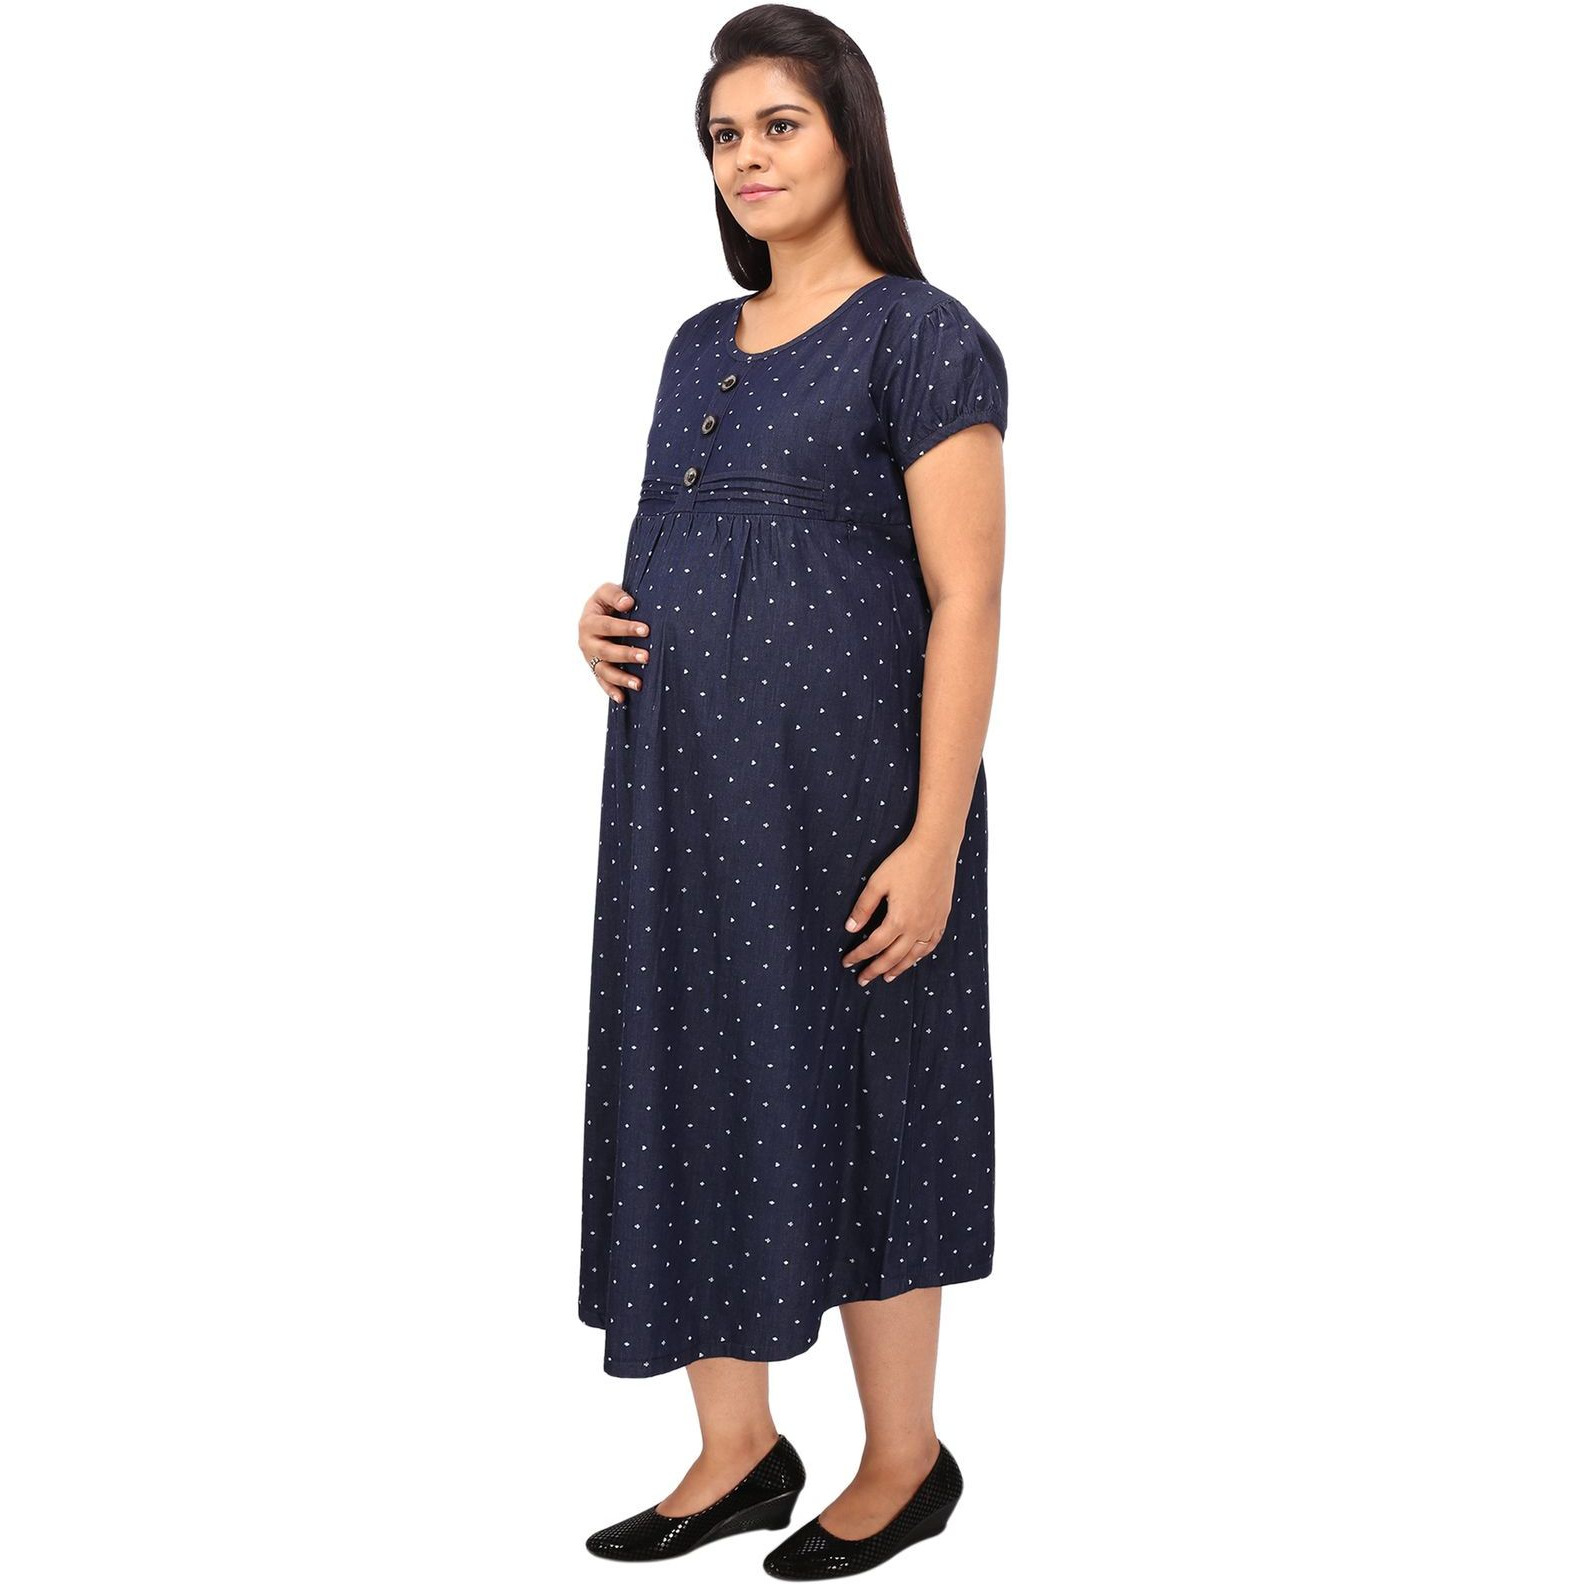 Mamma's Maternity Women's Heart Printed Blue Denim Maternity Dress